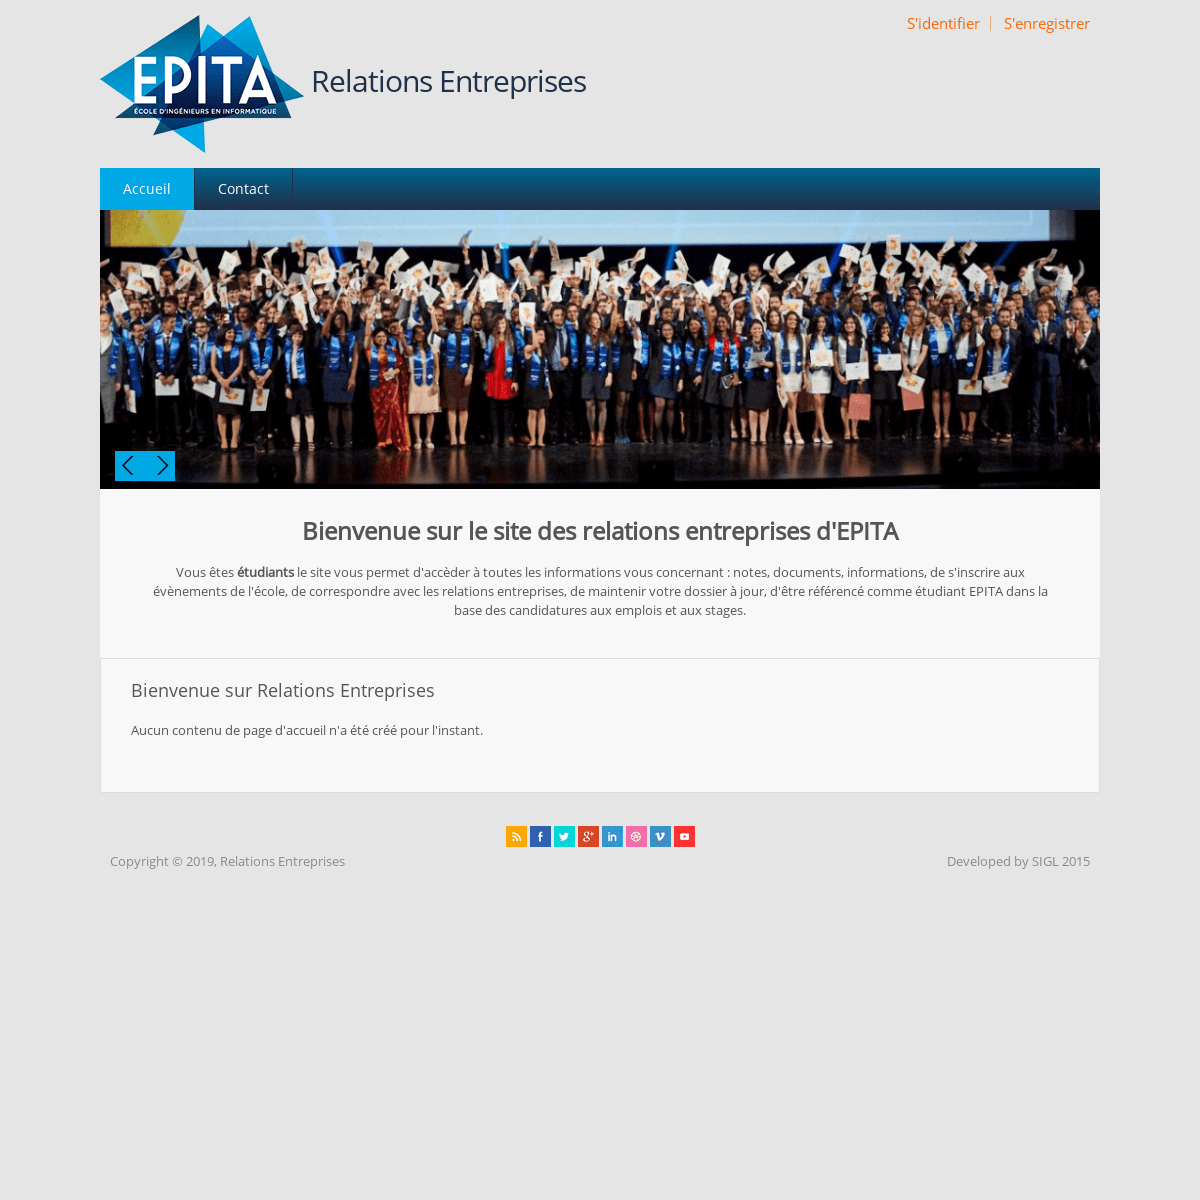 A complete backup of epita.net